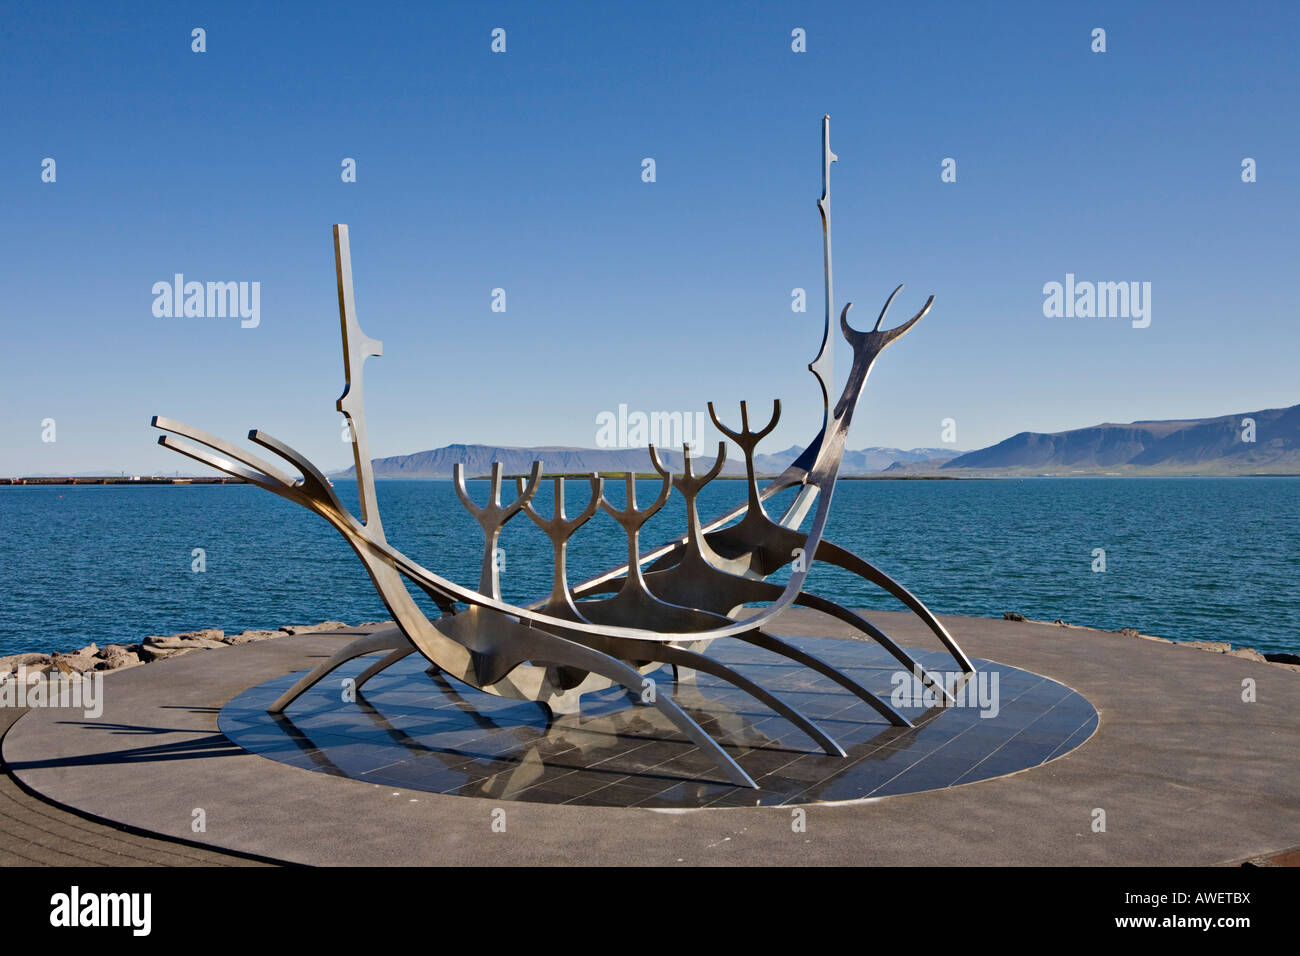 Modern sculpture made of steel resembling a viking ship (Sólfari) in Reykjavik, Iceland, Atlantic Ocean Stock Photo